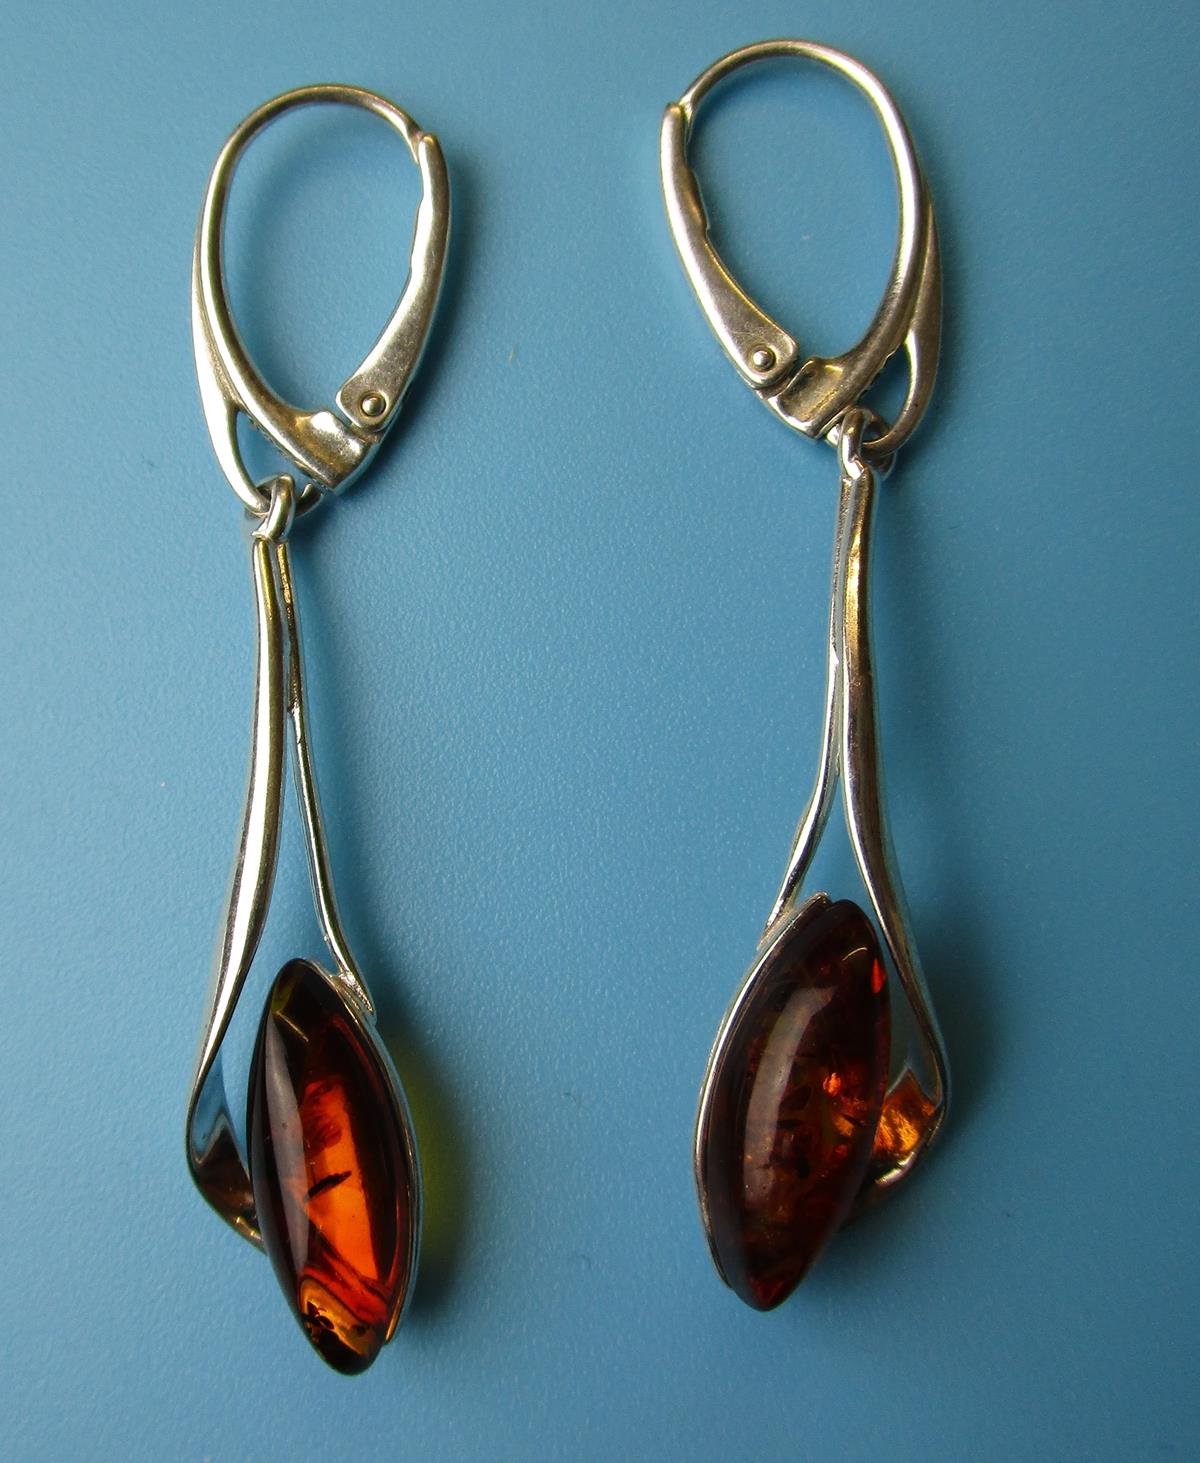 Pair of silver & amber drop earrings - Image 2 of 2